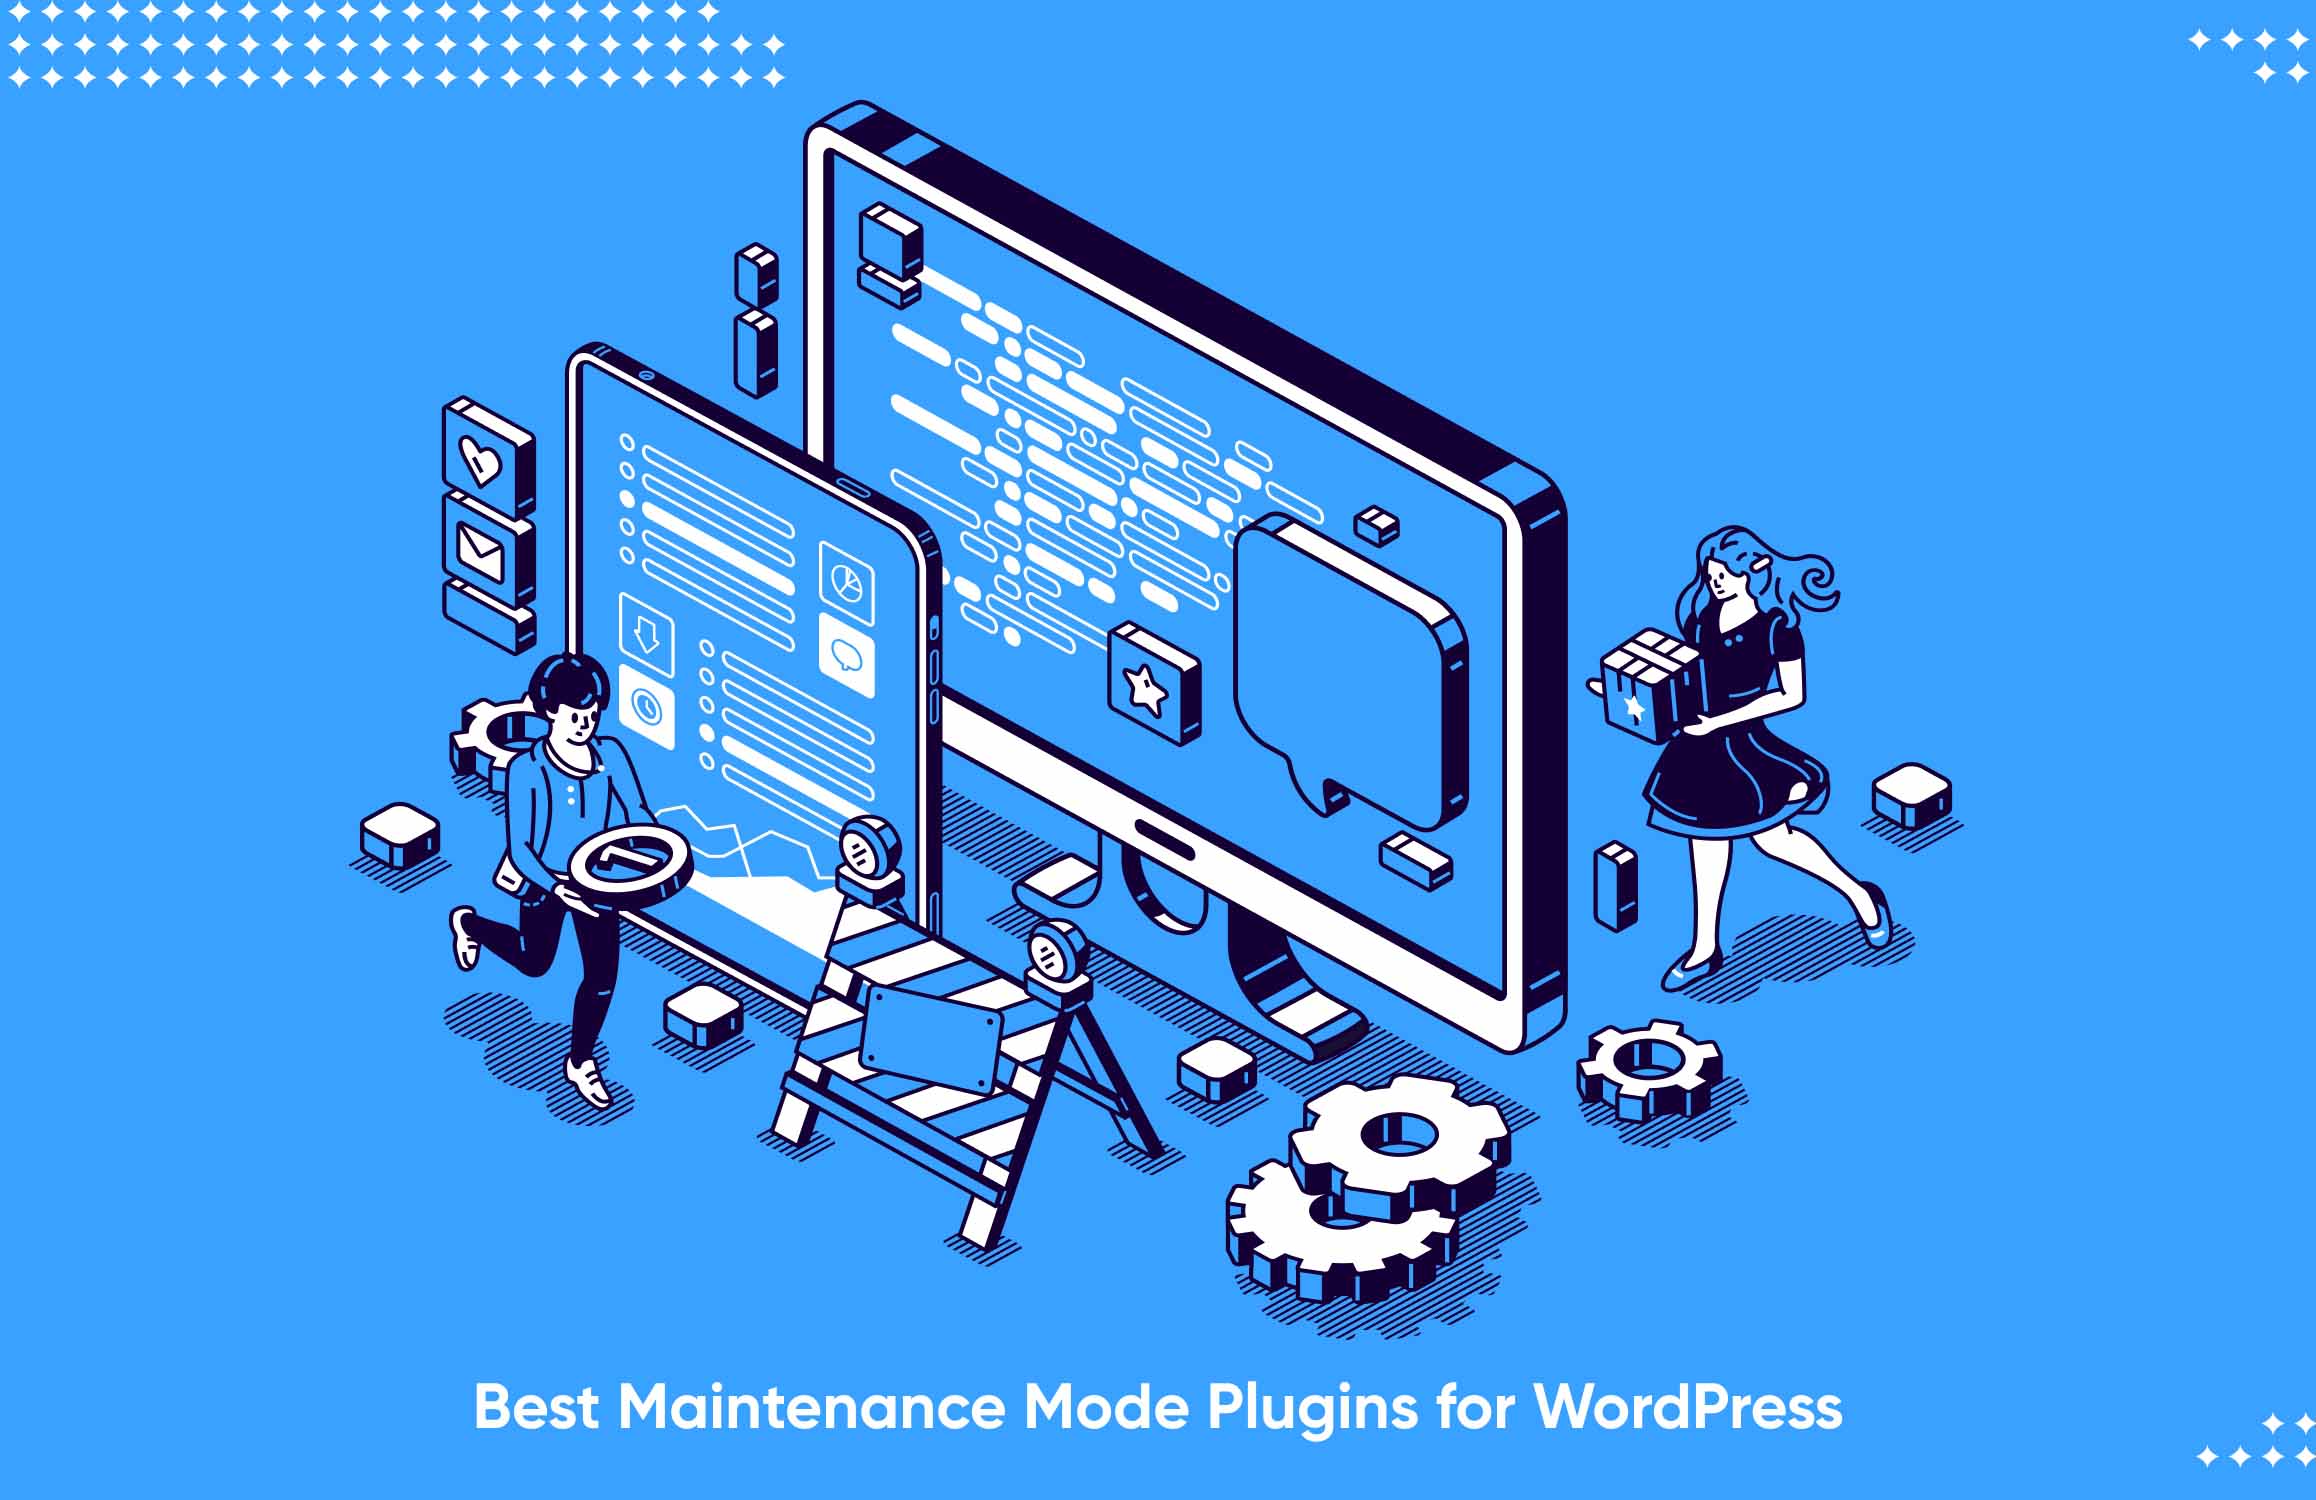 Maintenance Mode Plugins for WordPress